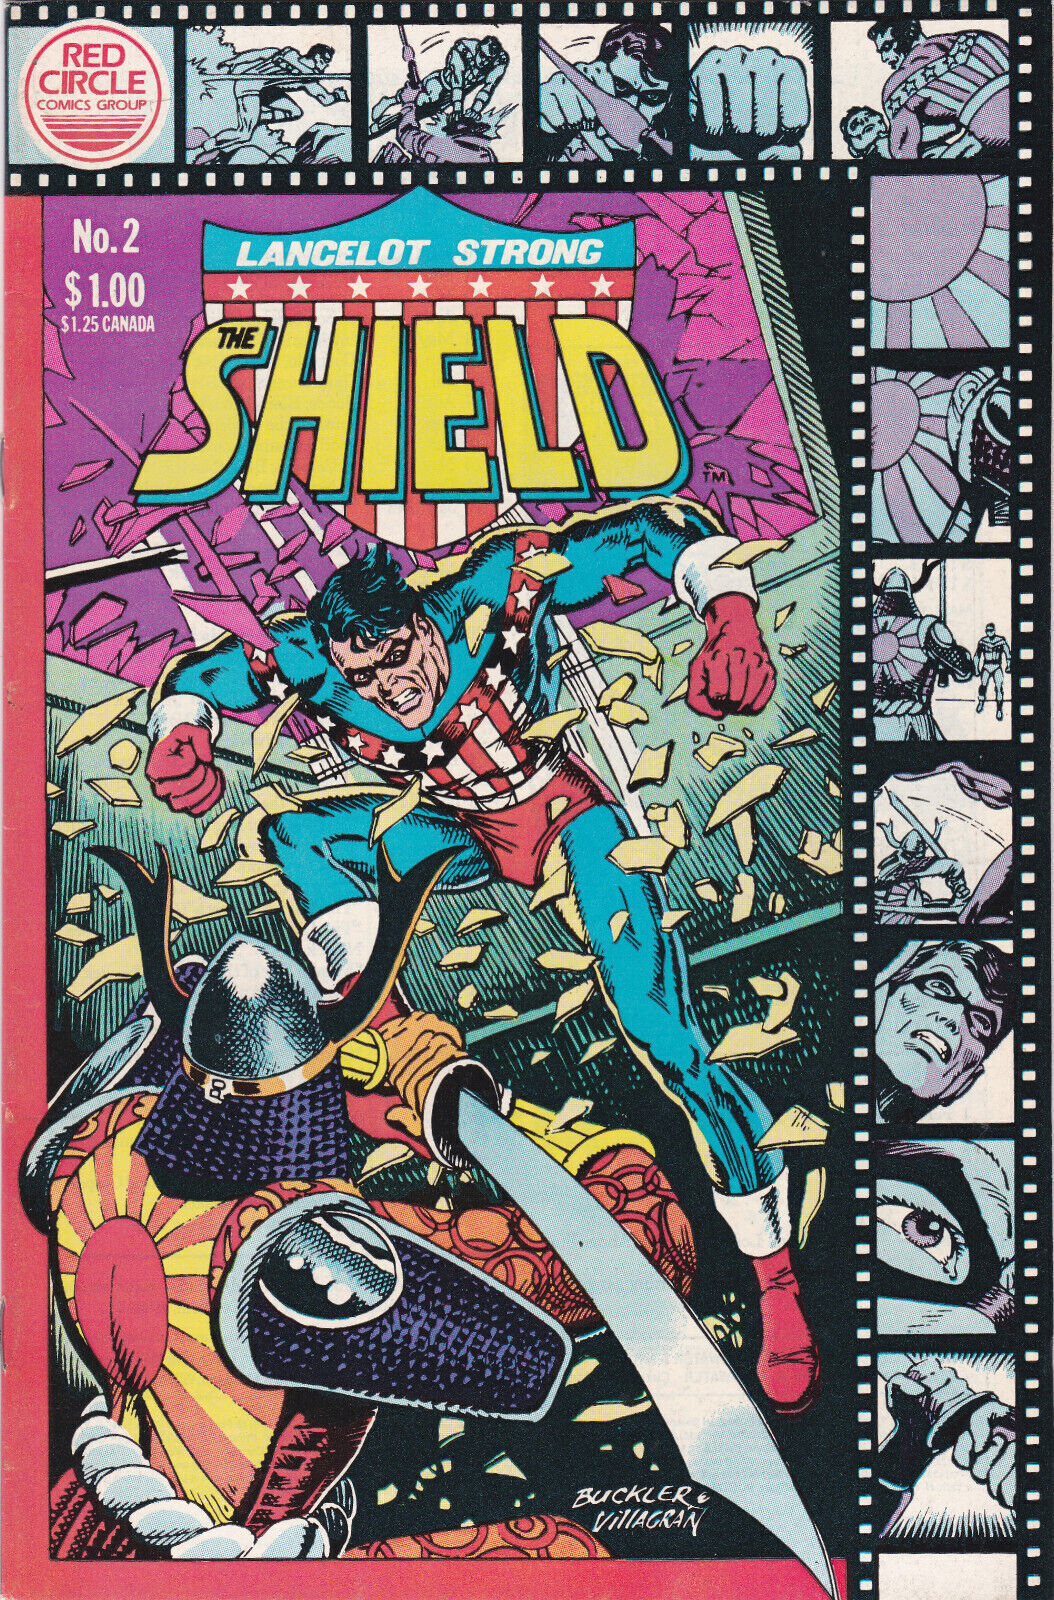 LANCELOT STRONG: THE SHIELD #2 RED CIRCLE COMICS/Archie Comics 1983 High Grade